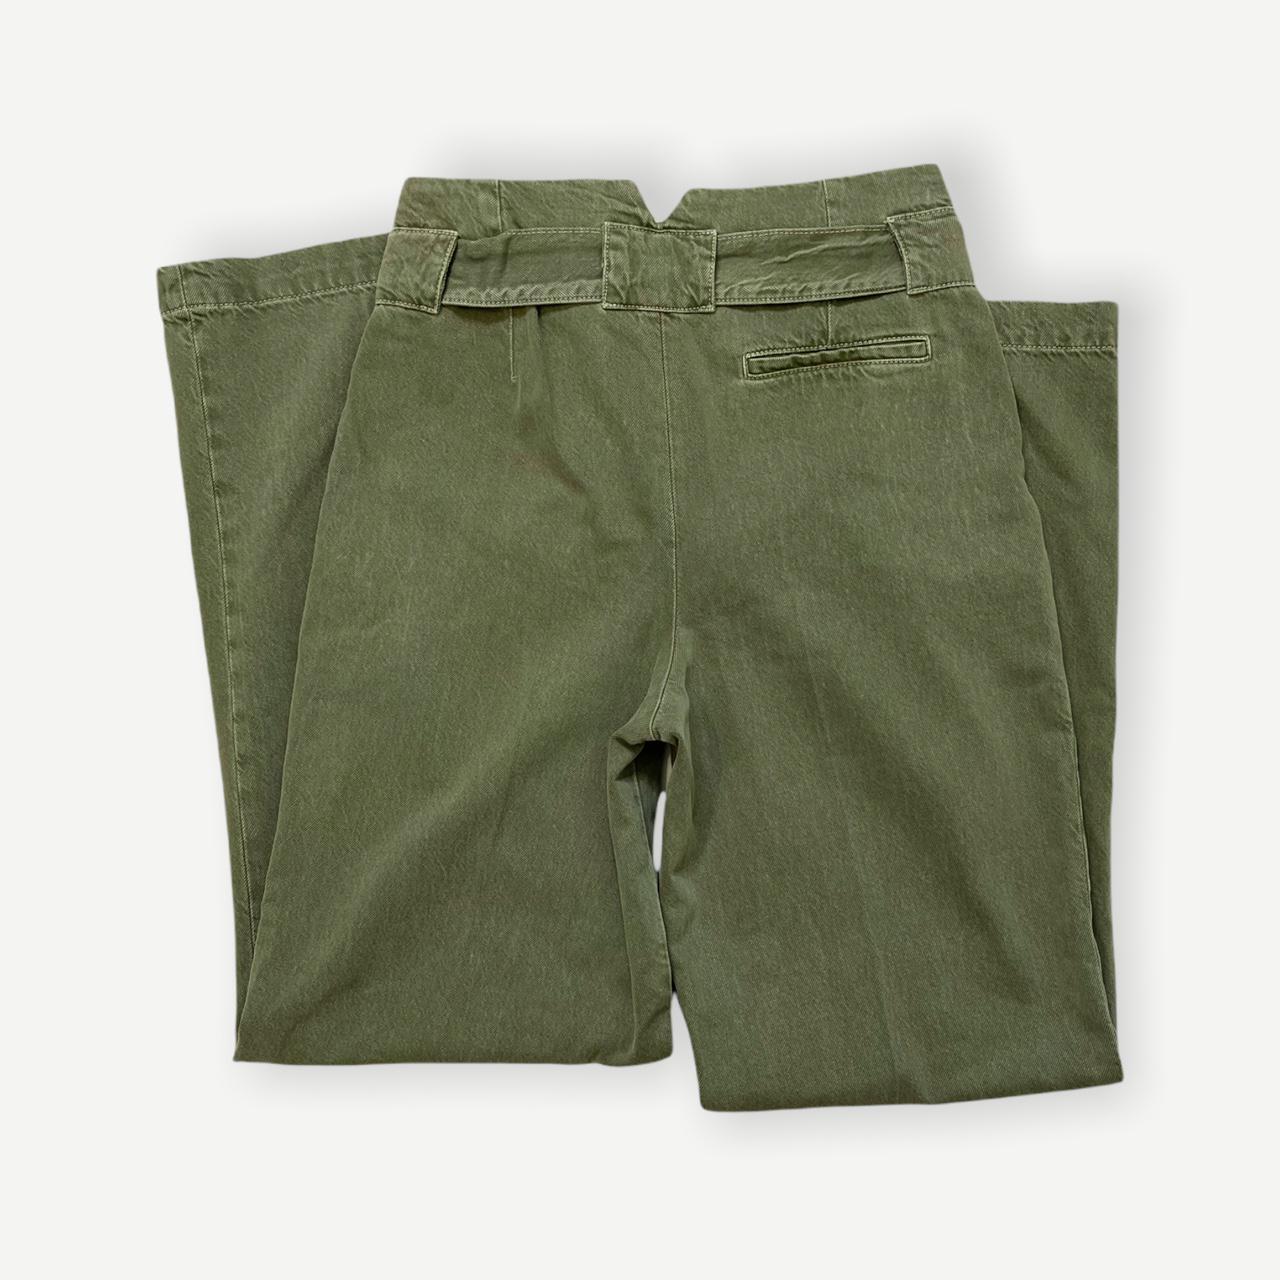 Sézane Women's Green and Khaki Trousers (3)